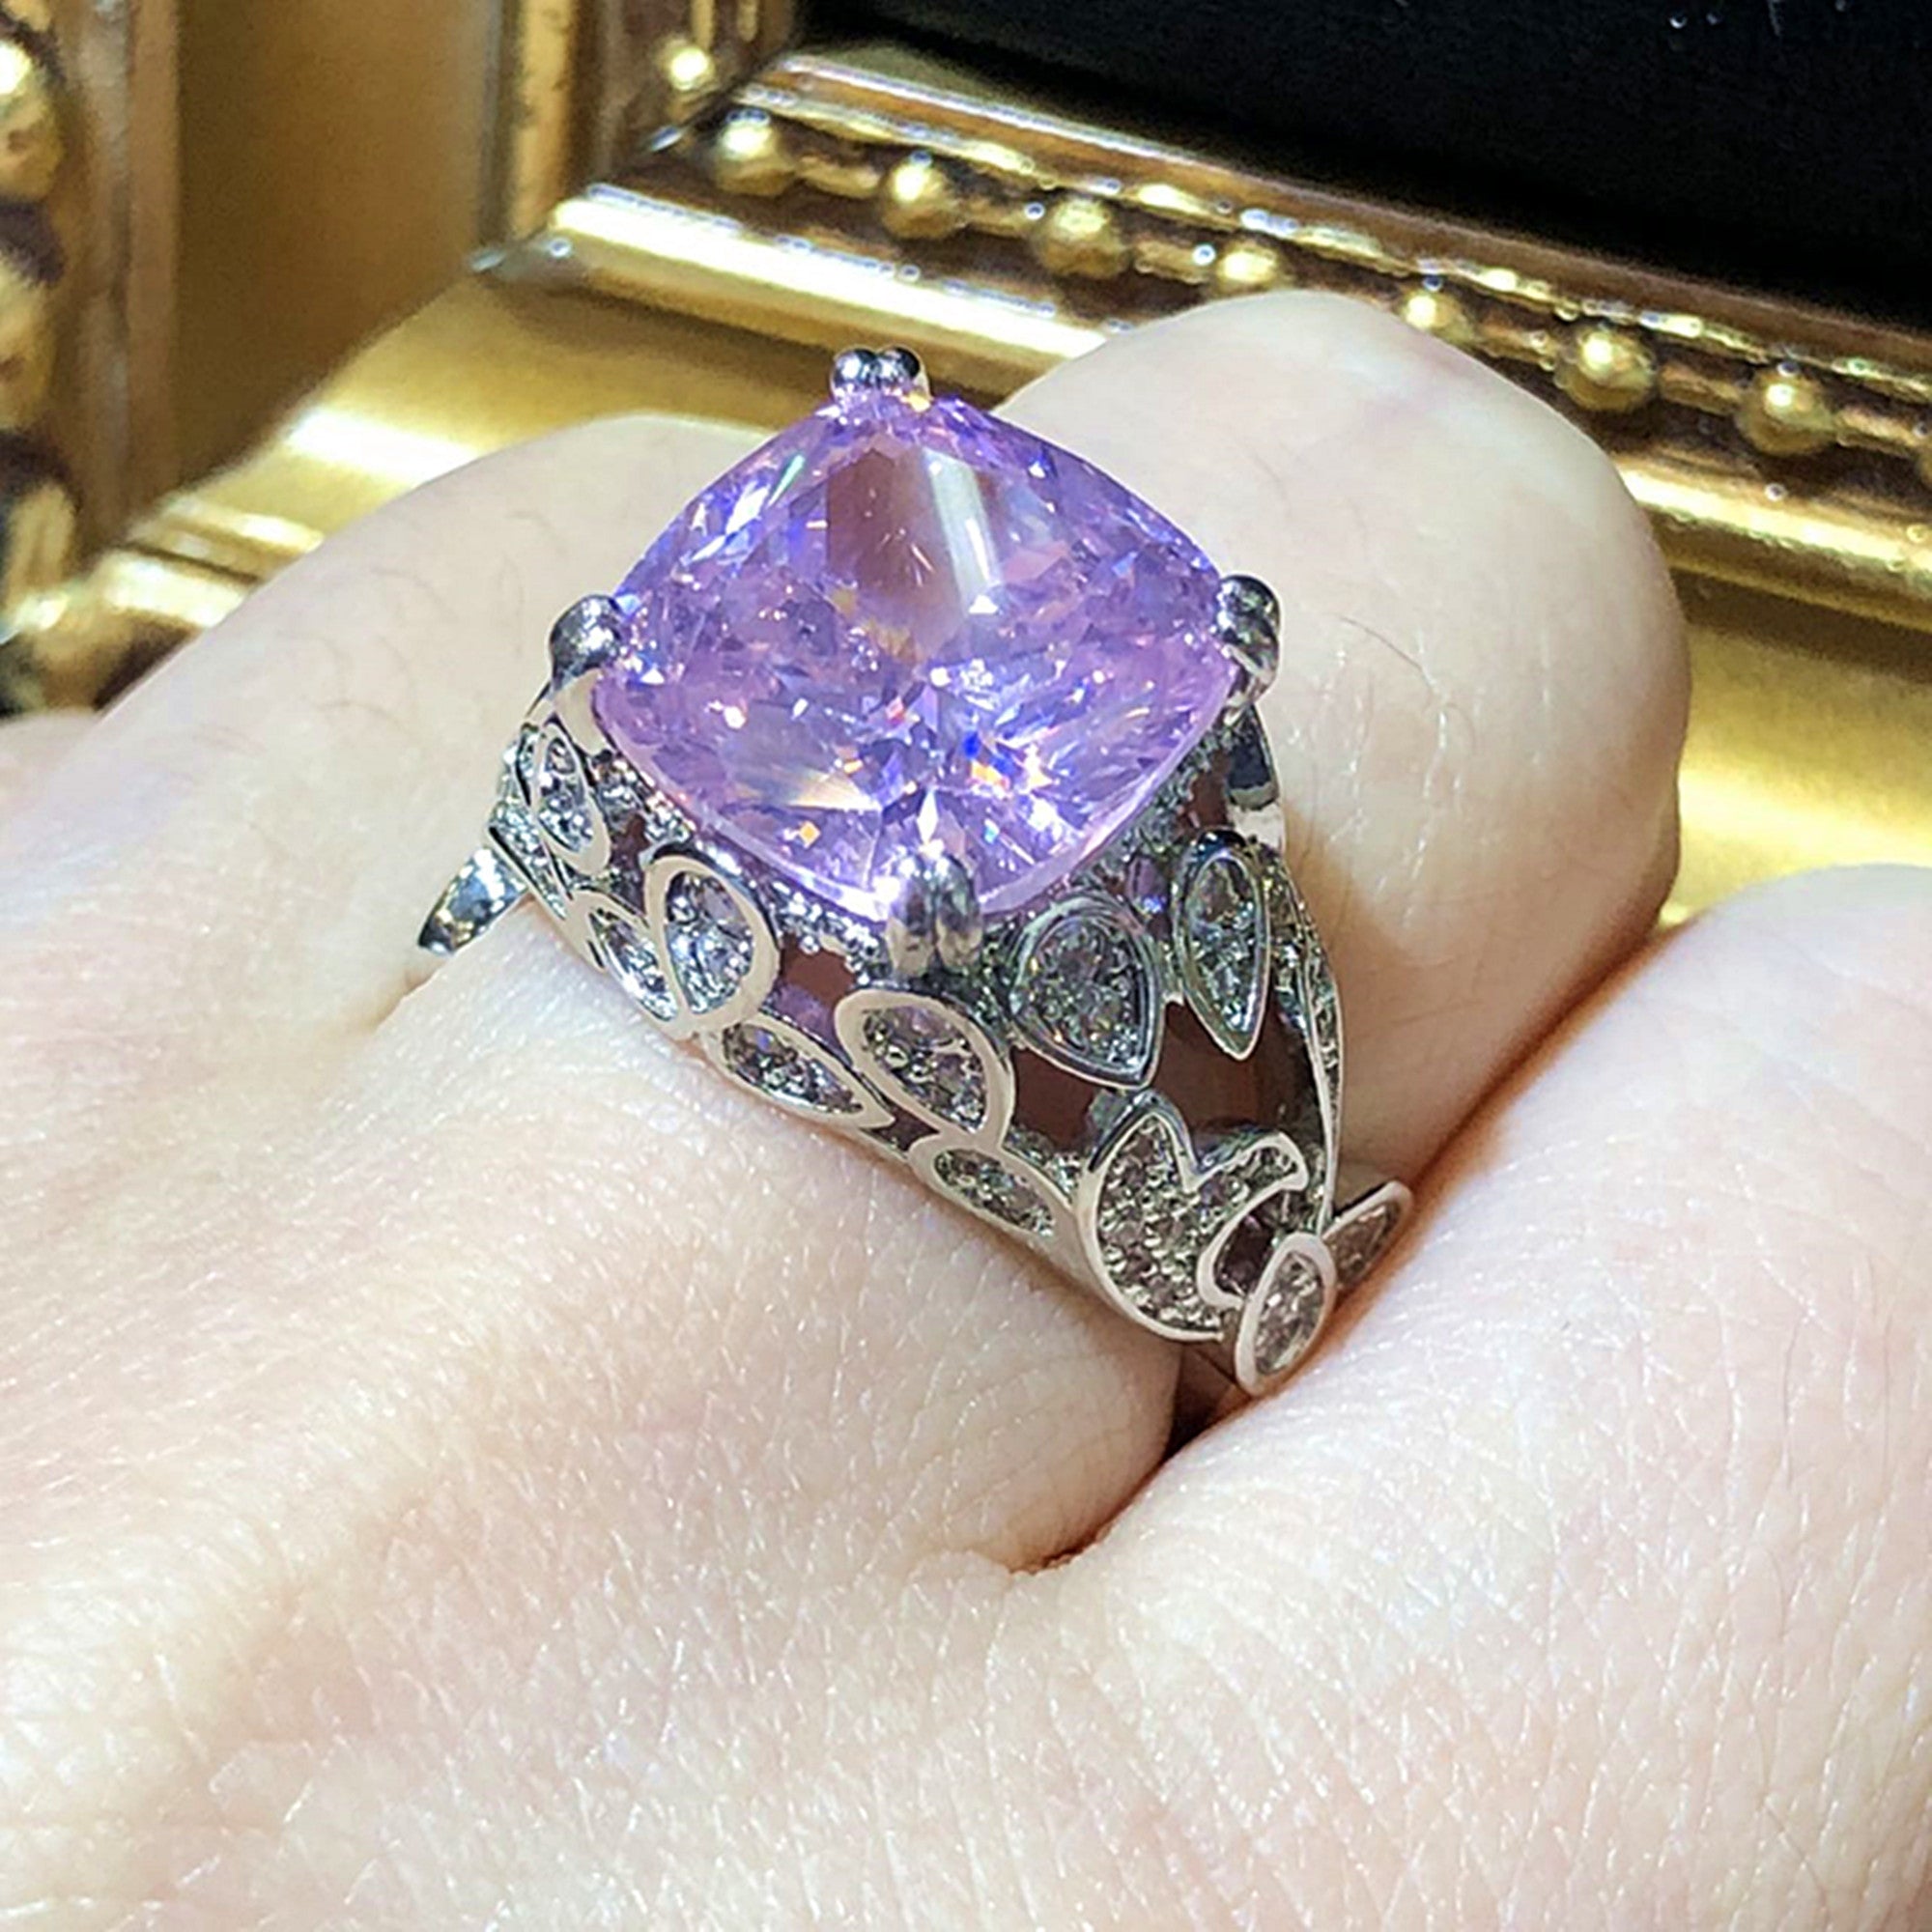 The Pave Pink Diamond Ring